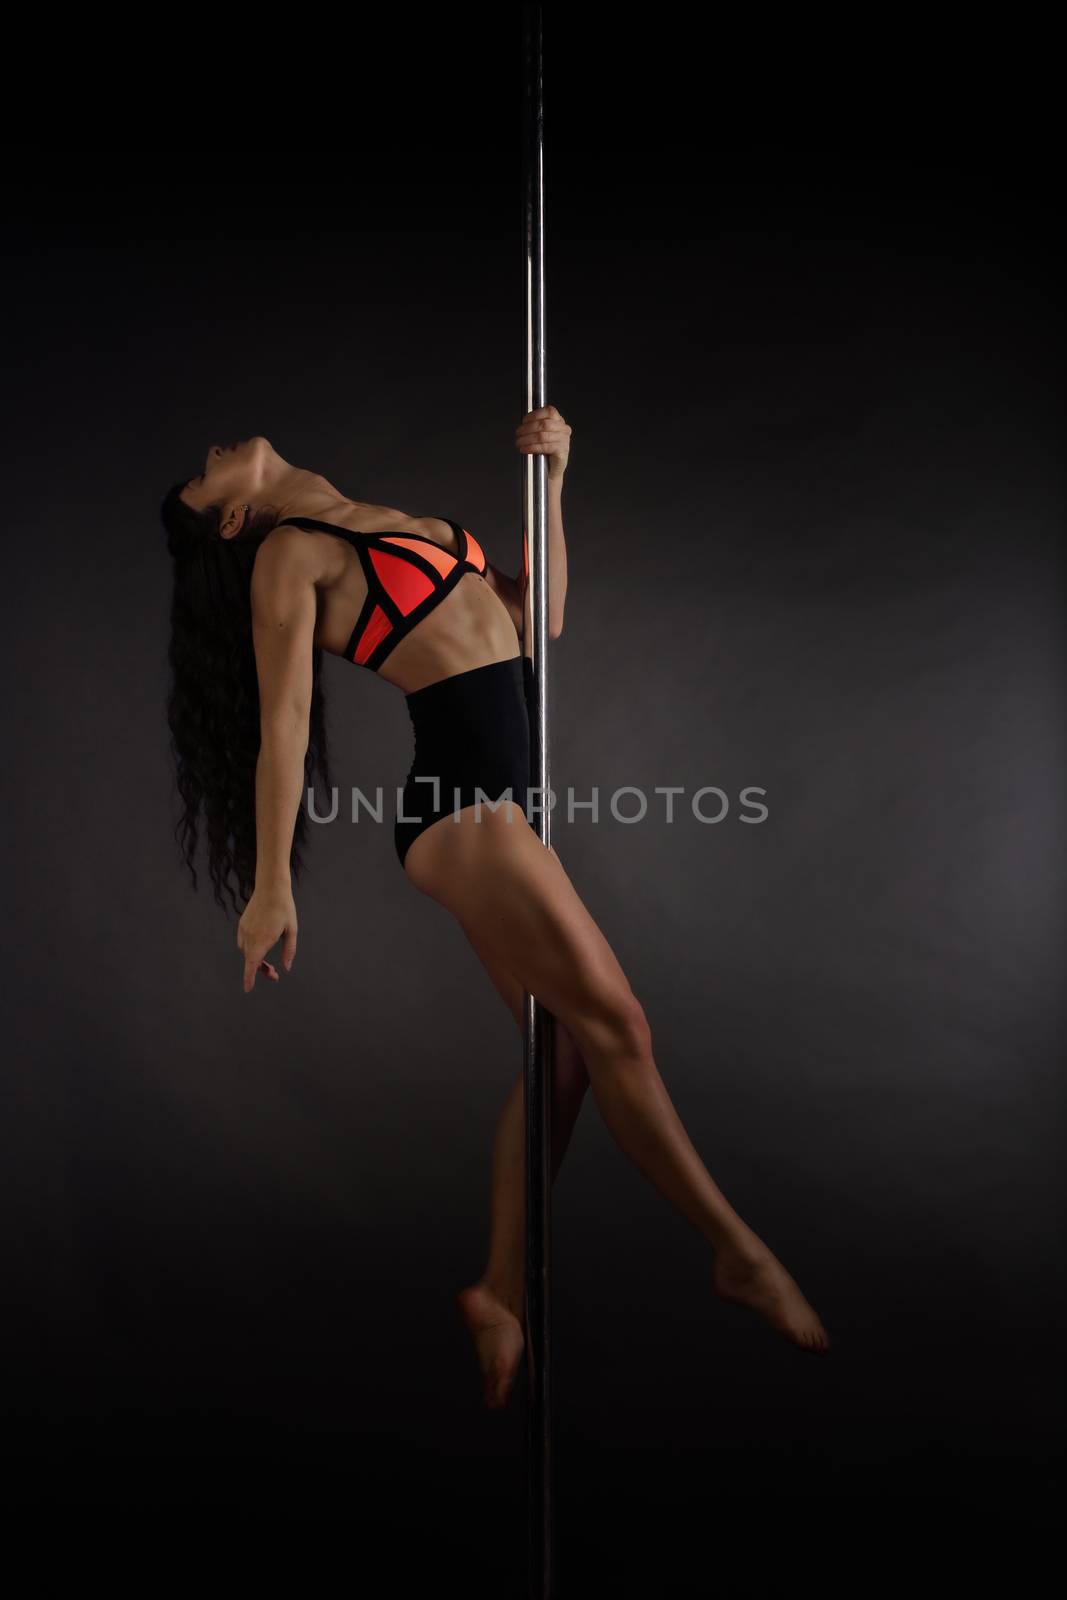 Woman performing pole dance by destillat